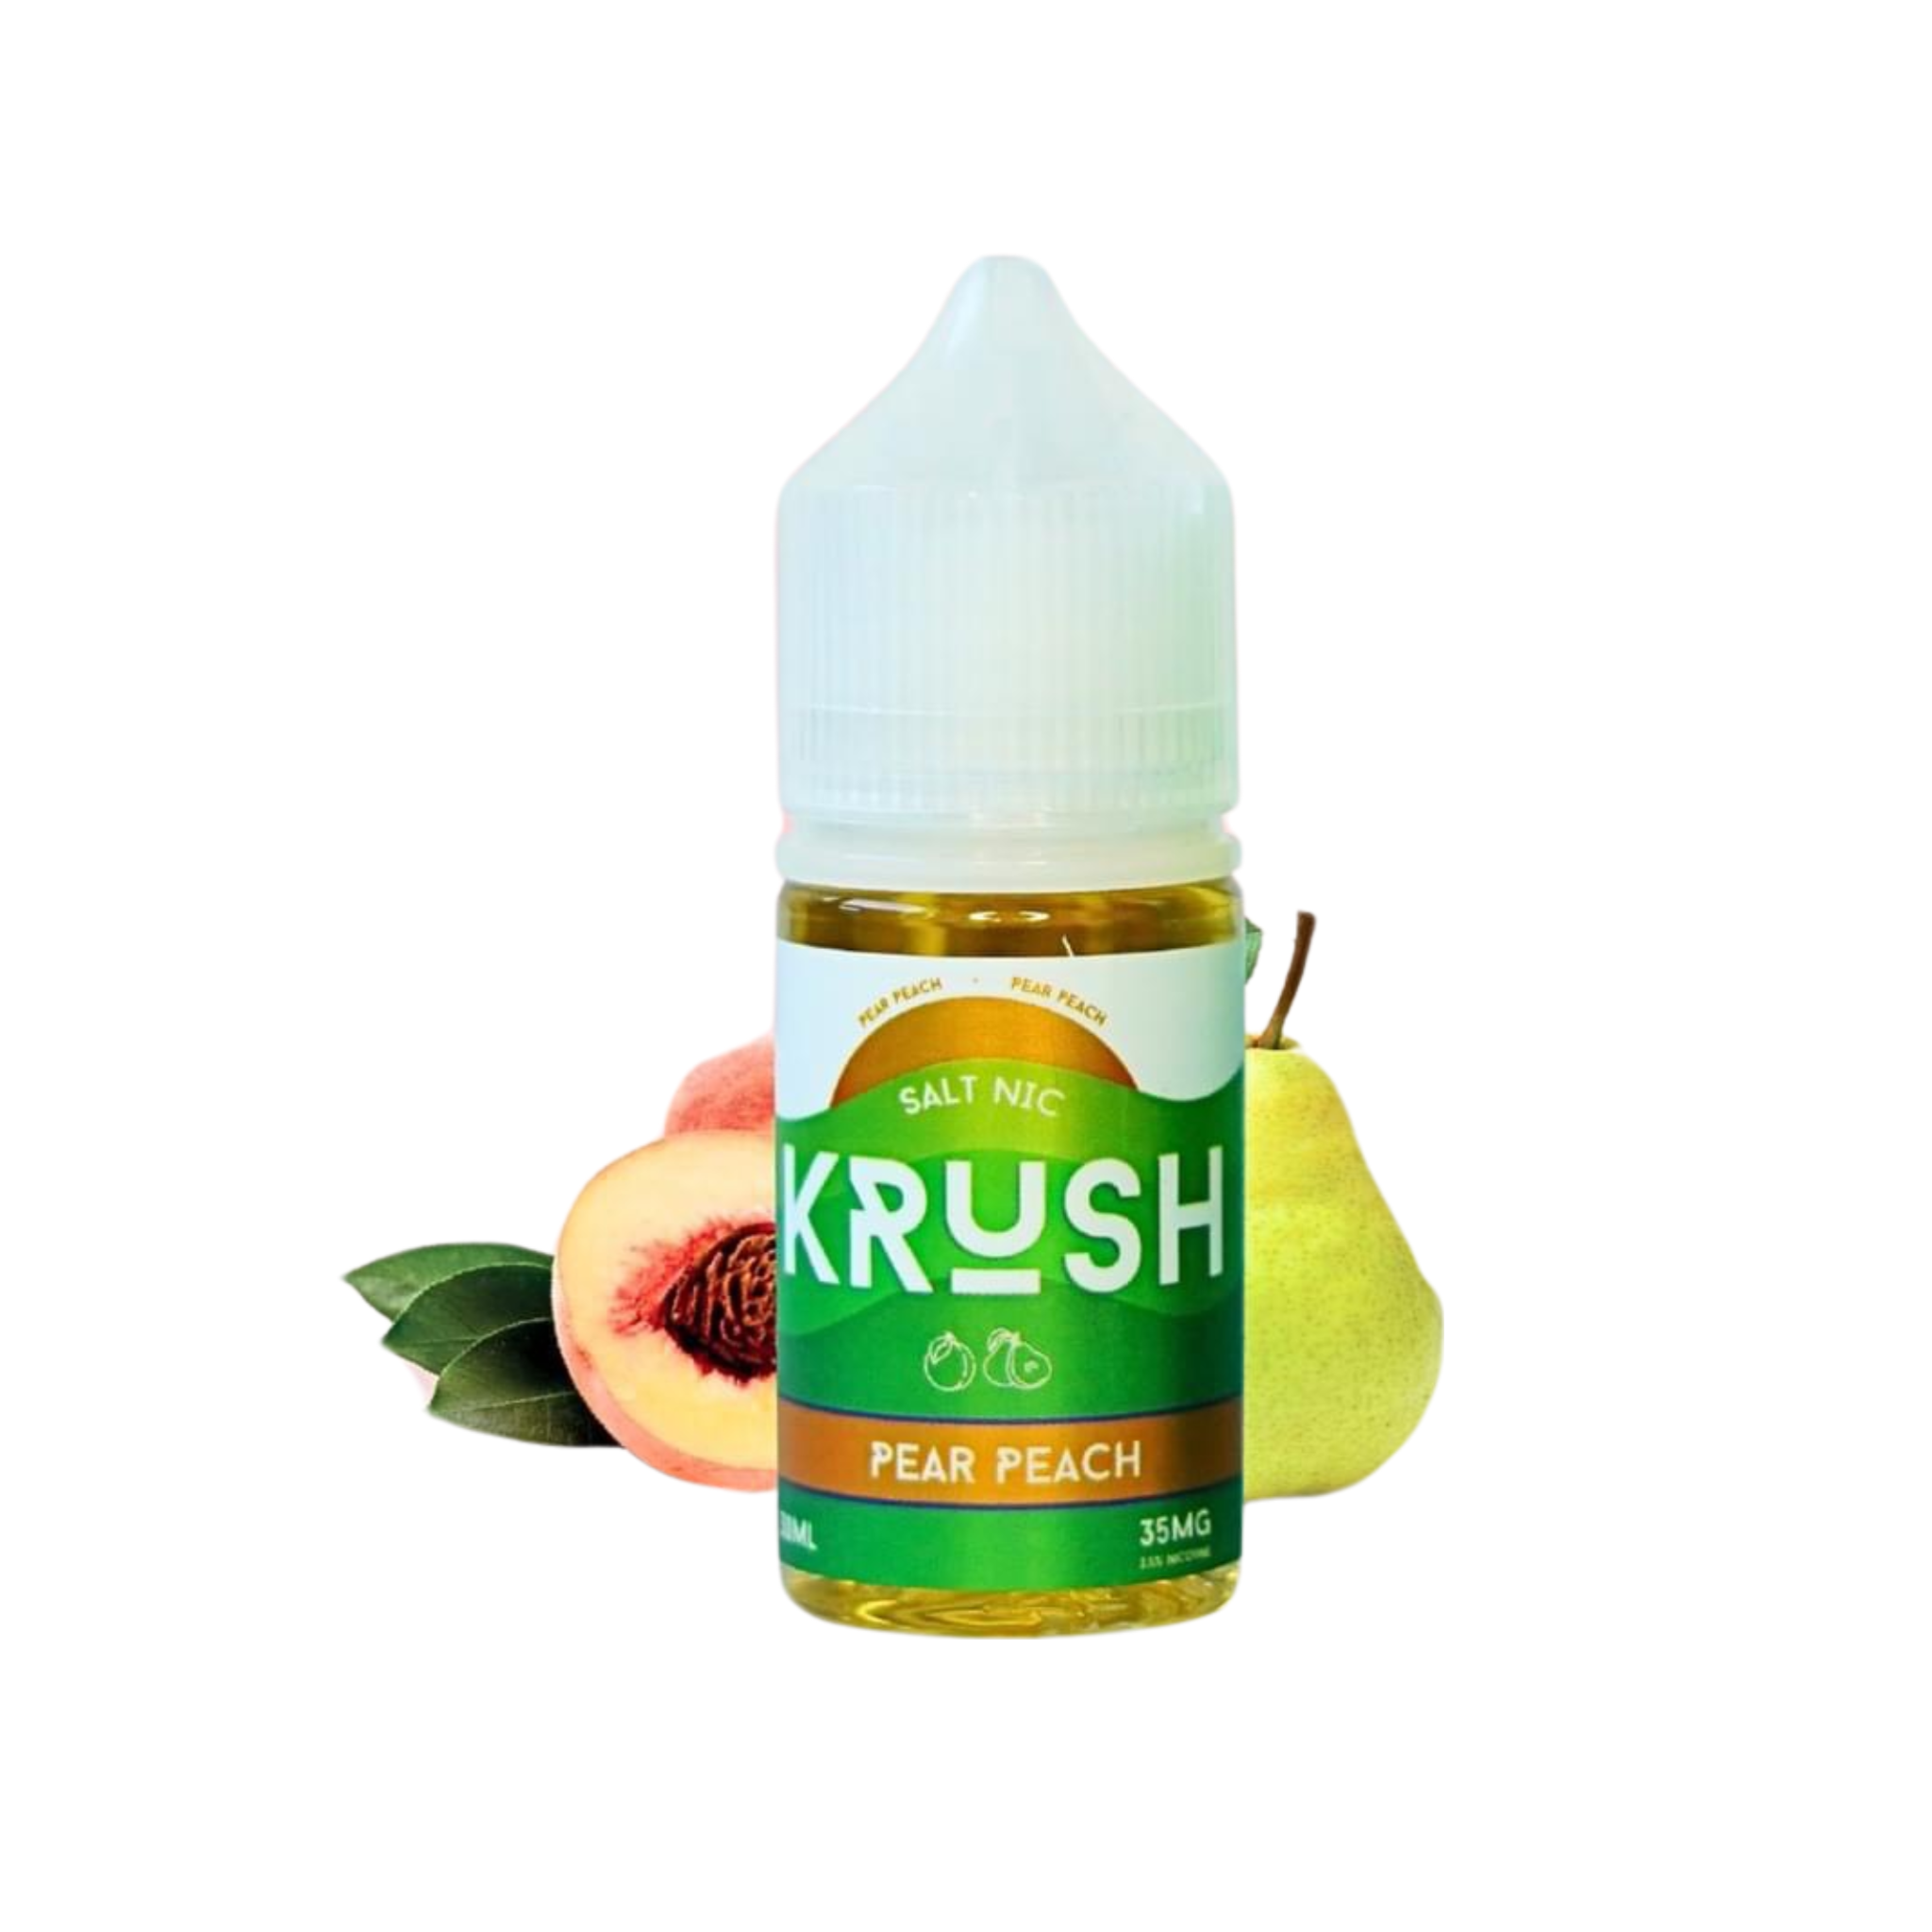 Krush Pear Peach - Đào Lê